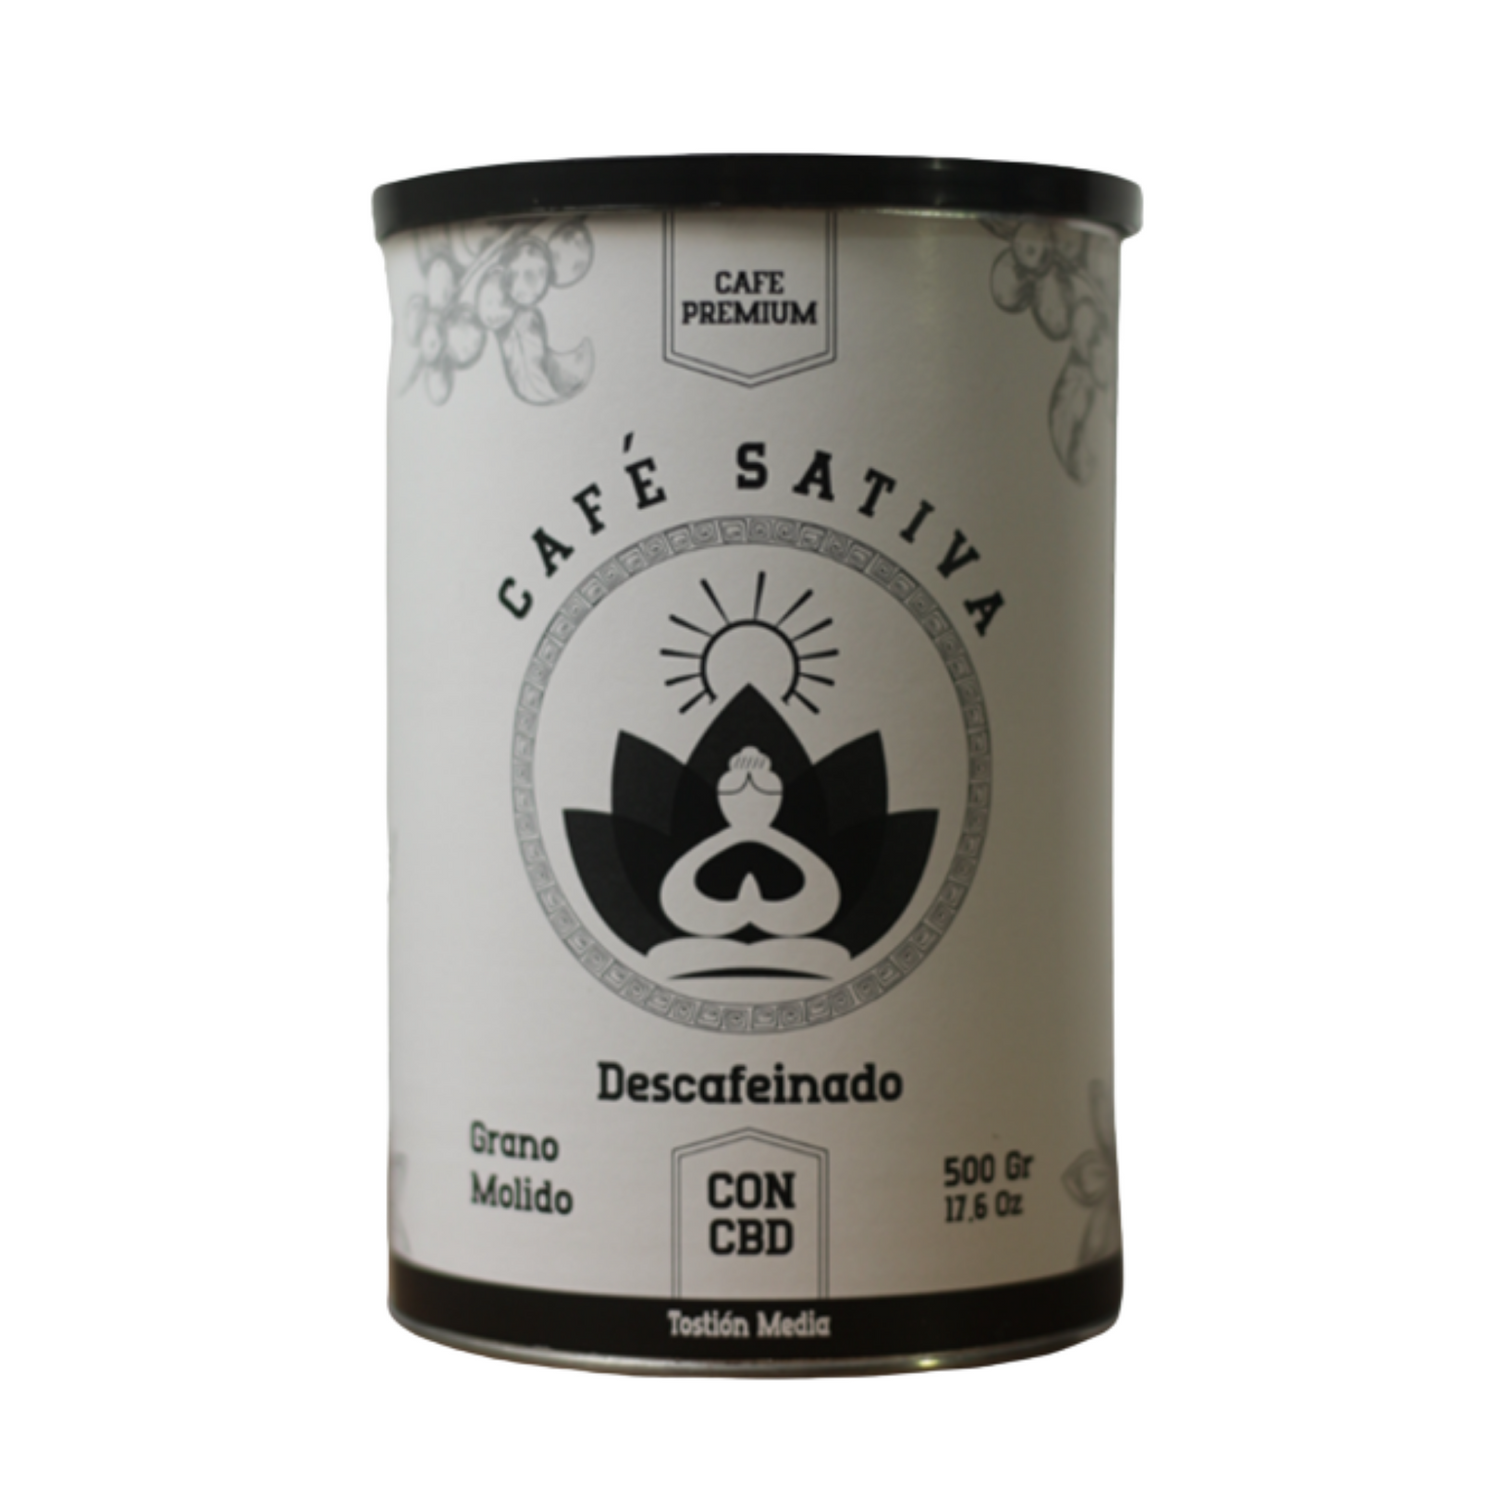 Decaffeinated Sativa Single-origin Organic coffee with CBD 500g